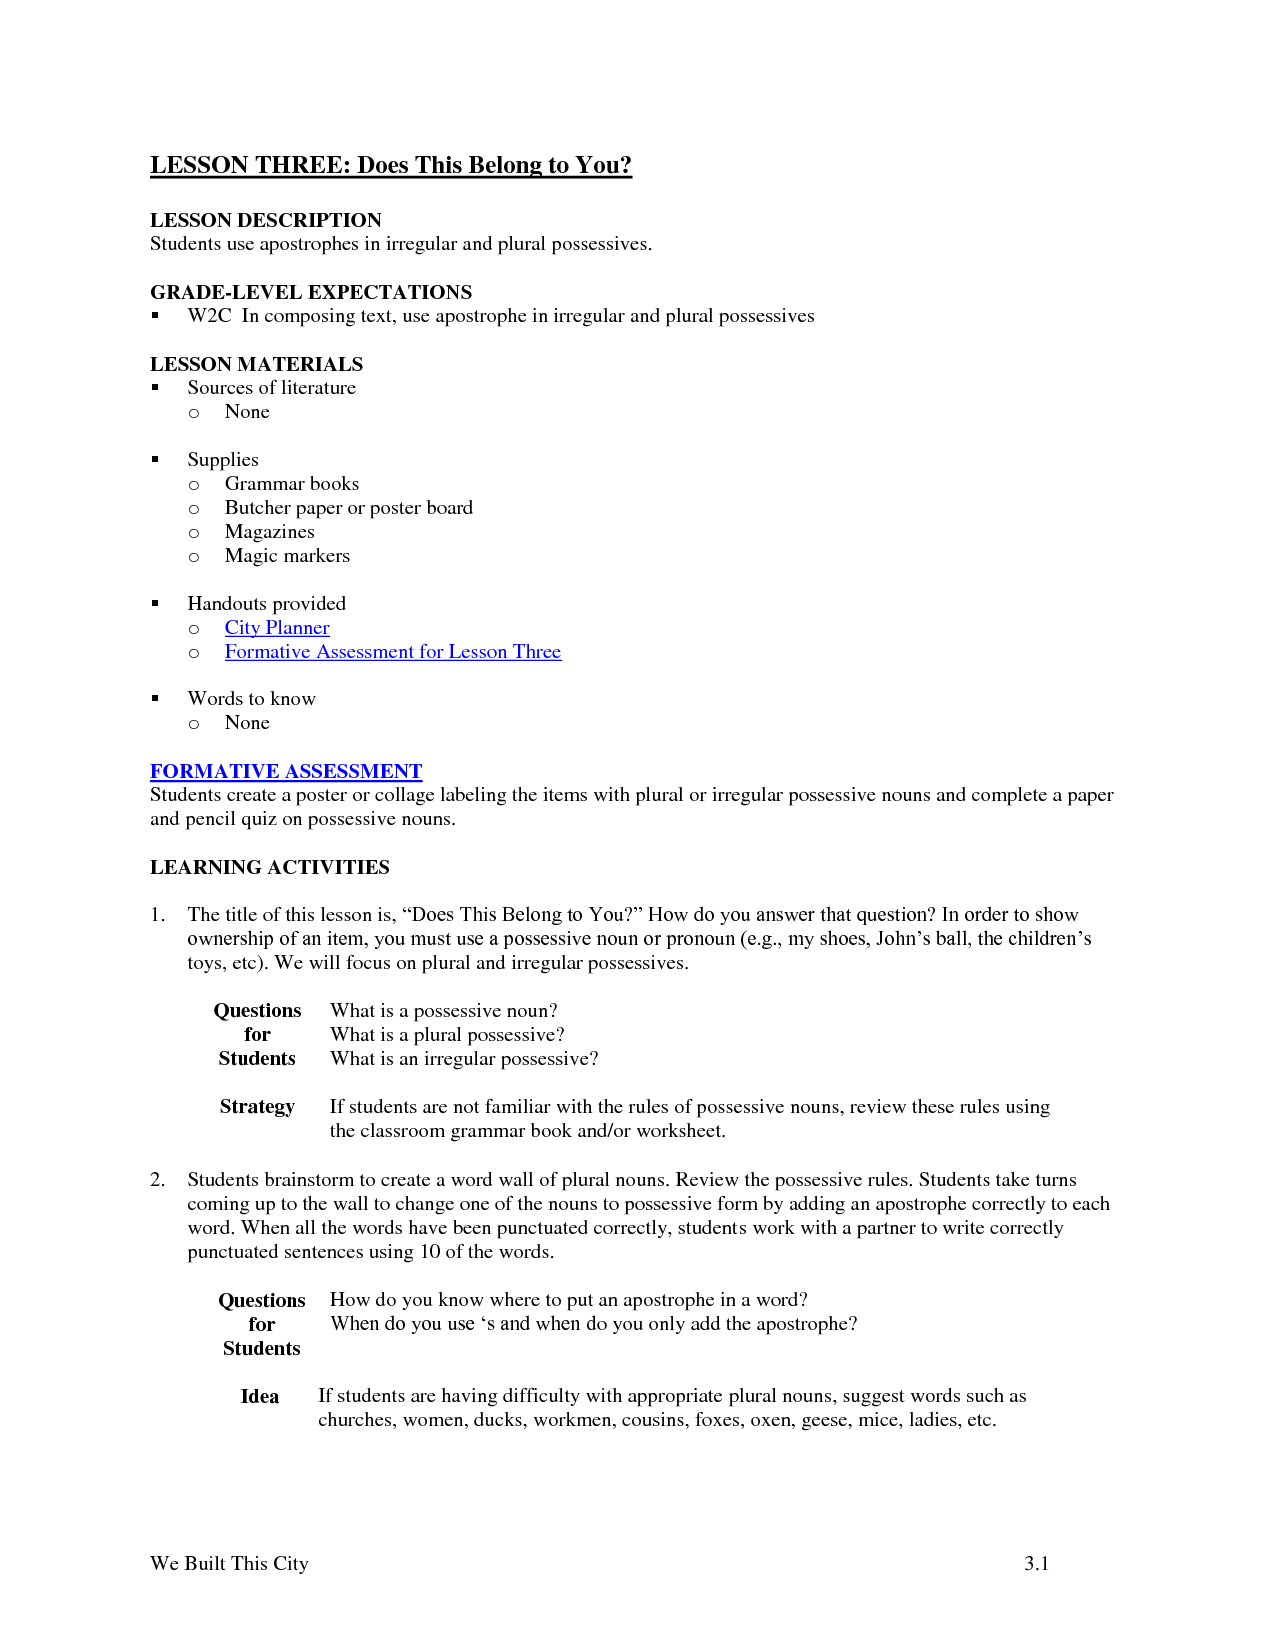 possessive-nouns-worksheet-worksheets-99worksheets